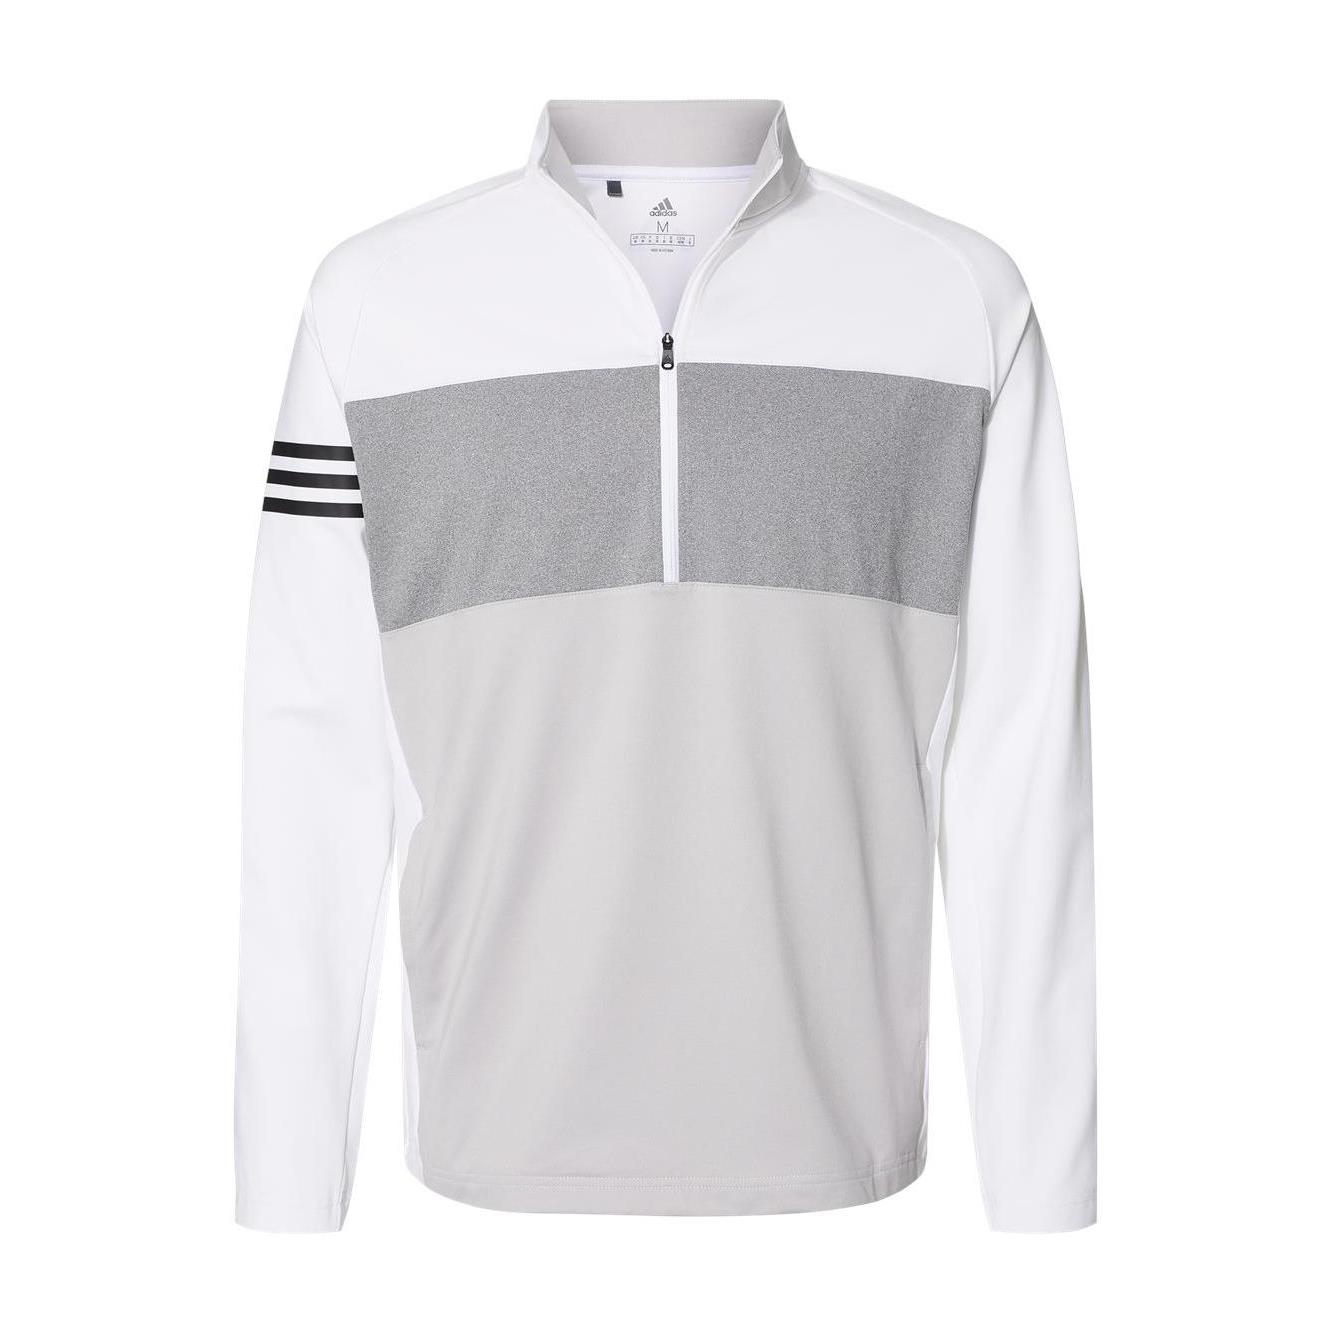 Adidas - 3-Stripes Competition Quarter-zip Pullover - A492 White/ Grey Three Heather/ Grey Three